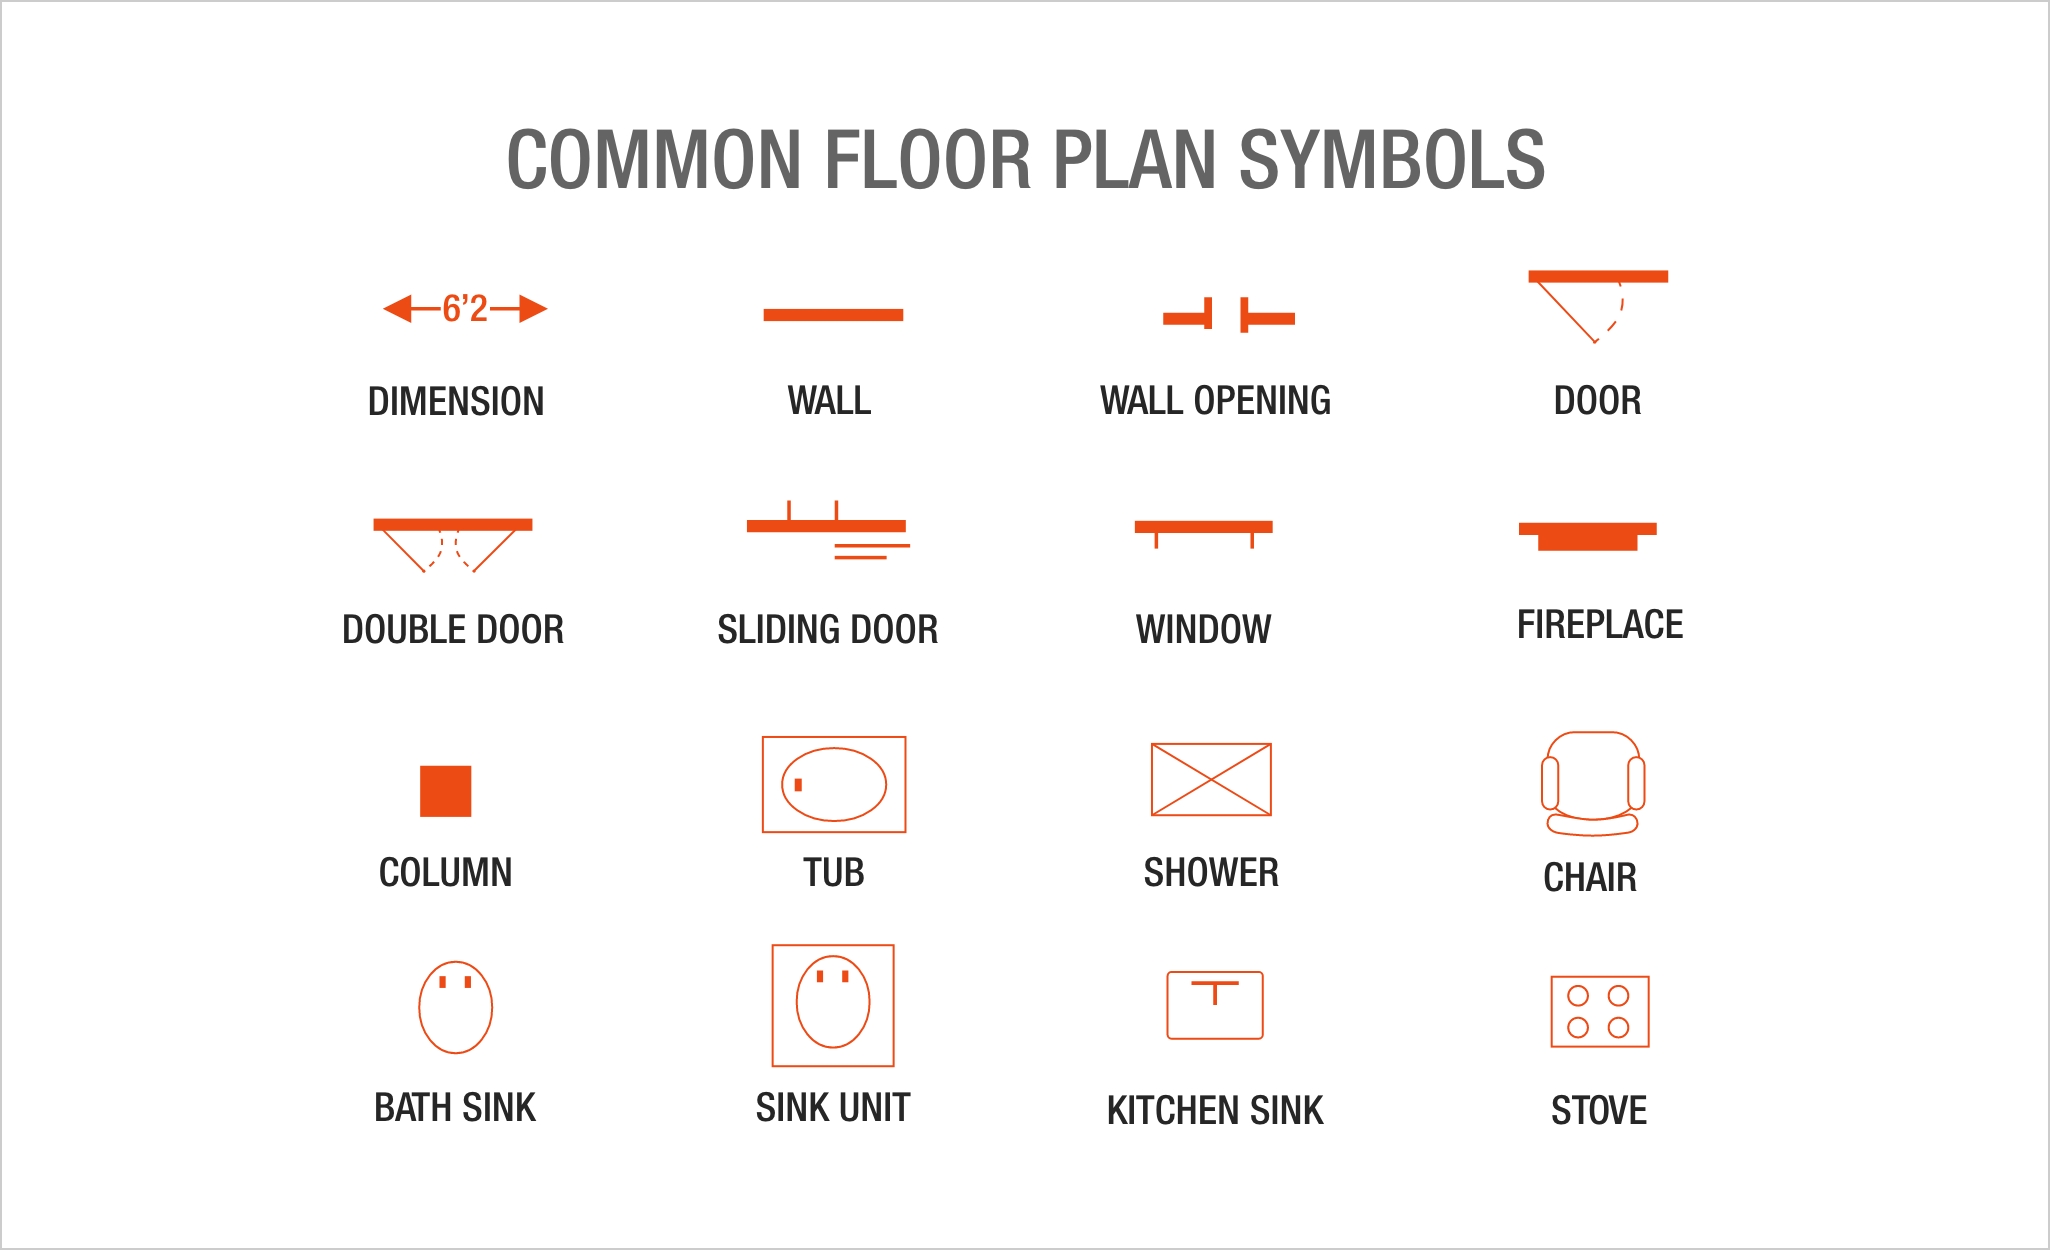 Common floor plan symbols.